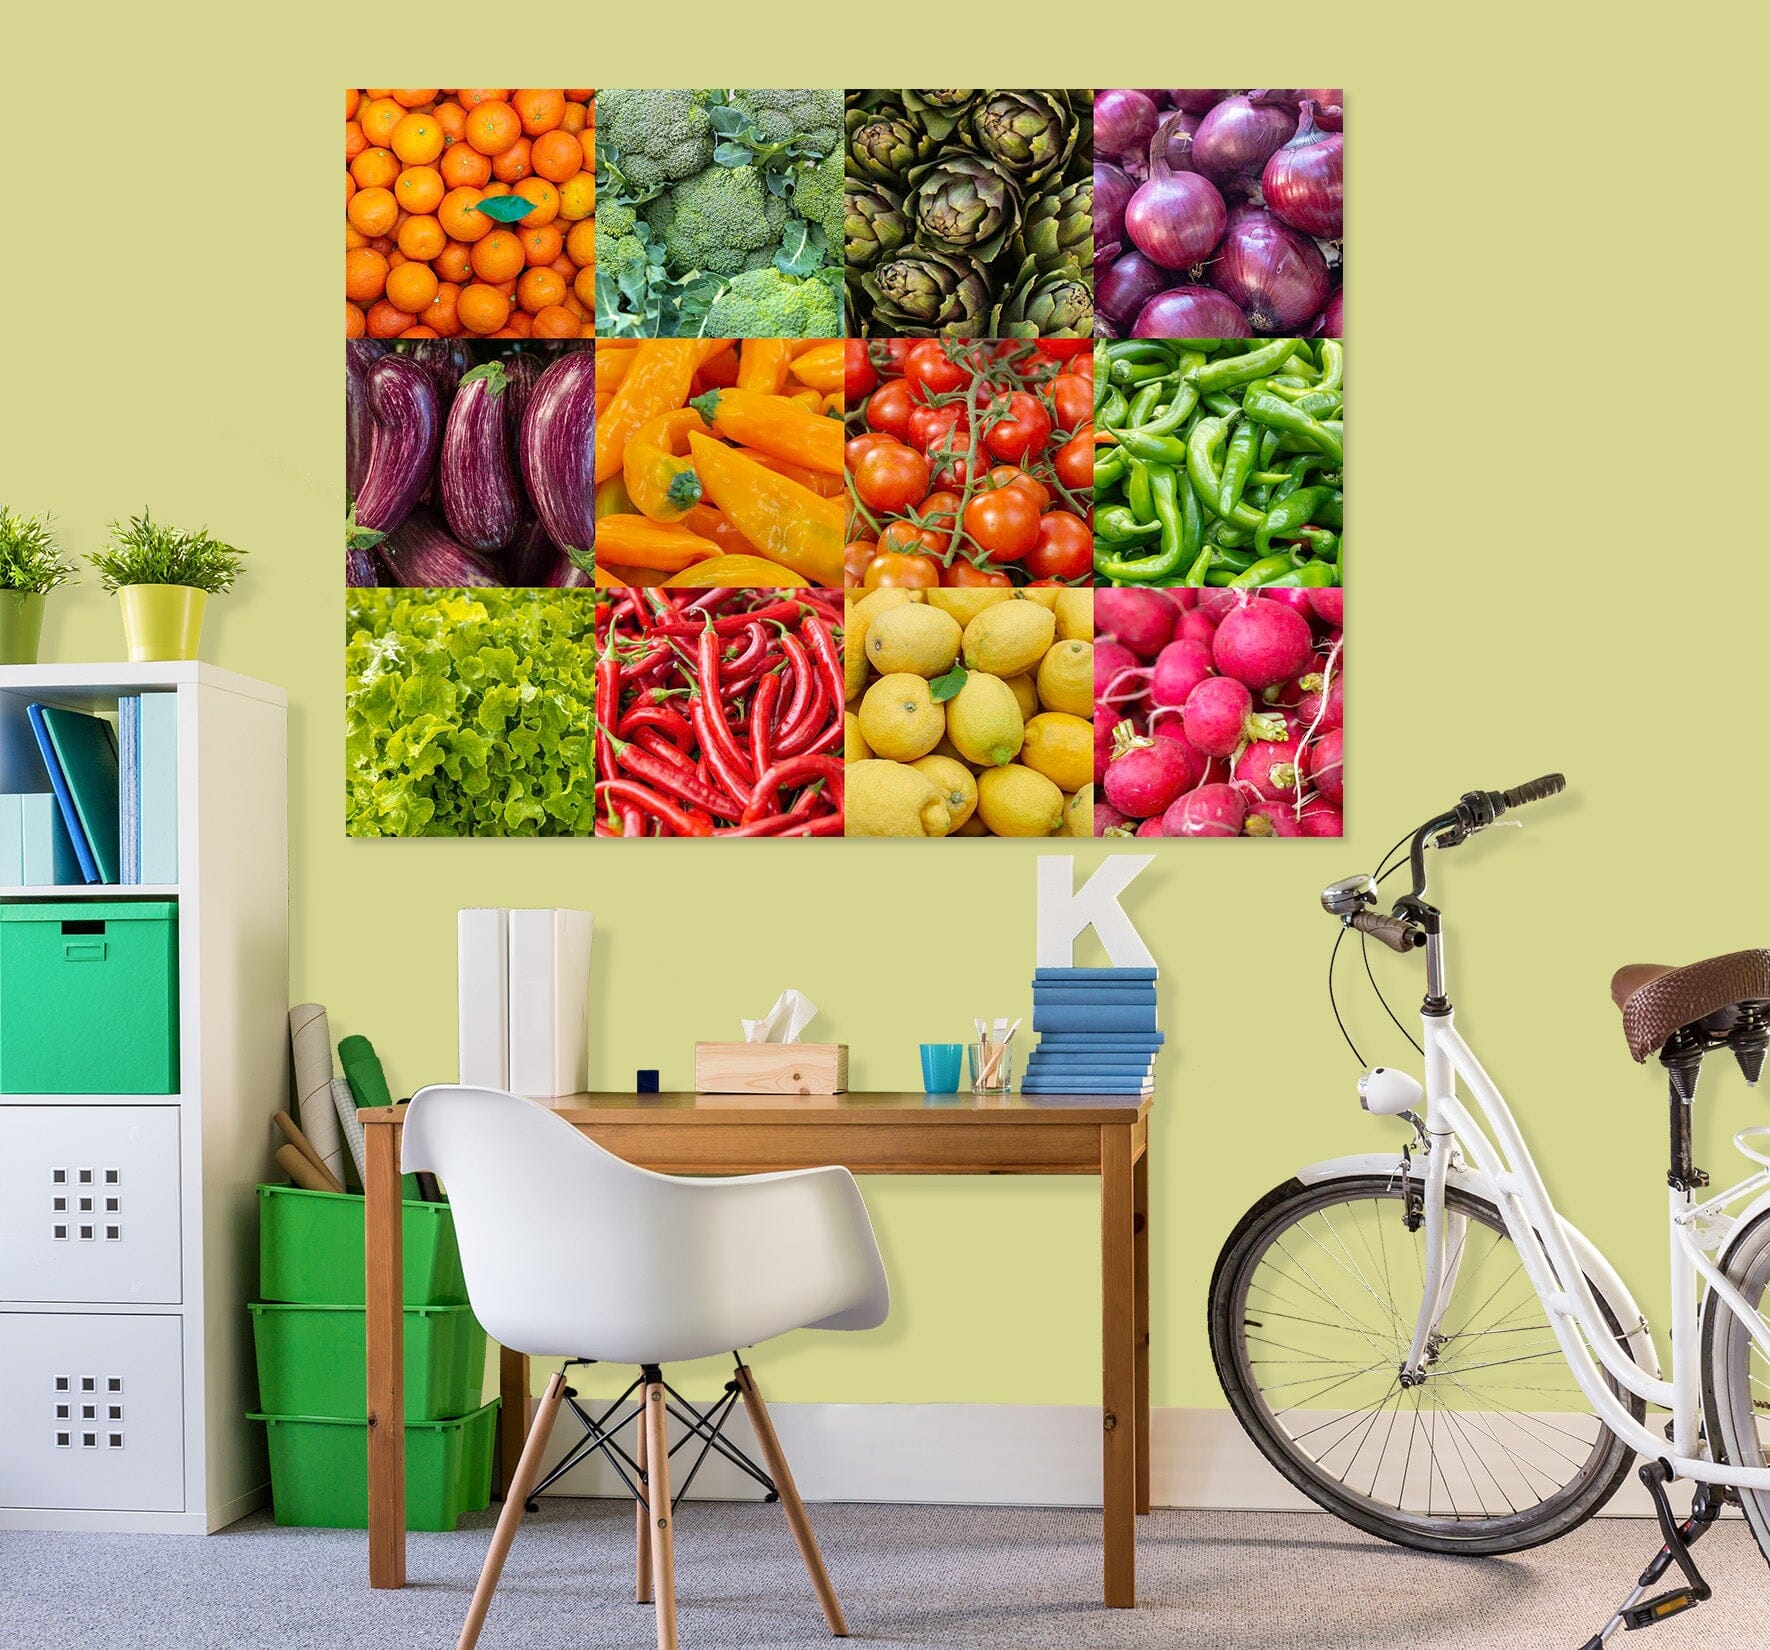 3D Fresh Fruits And Vegetables 033 Assaf Frank Wall Sticker Wallpaper AJ Wallpaper 2 